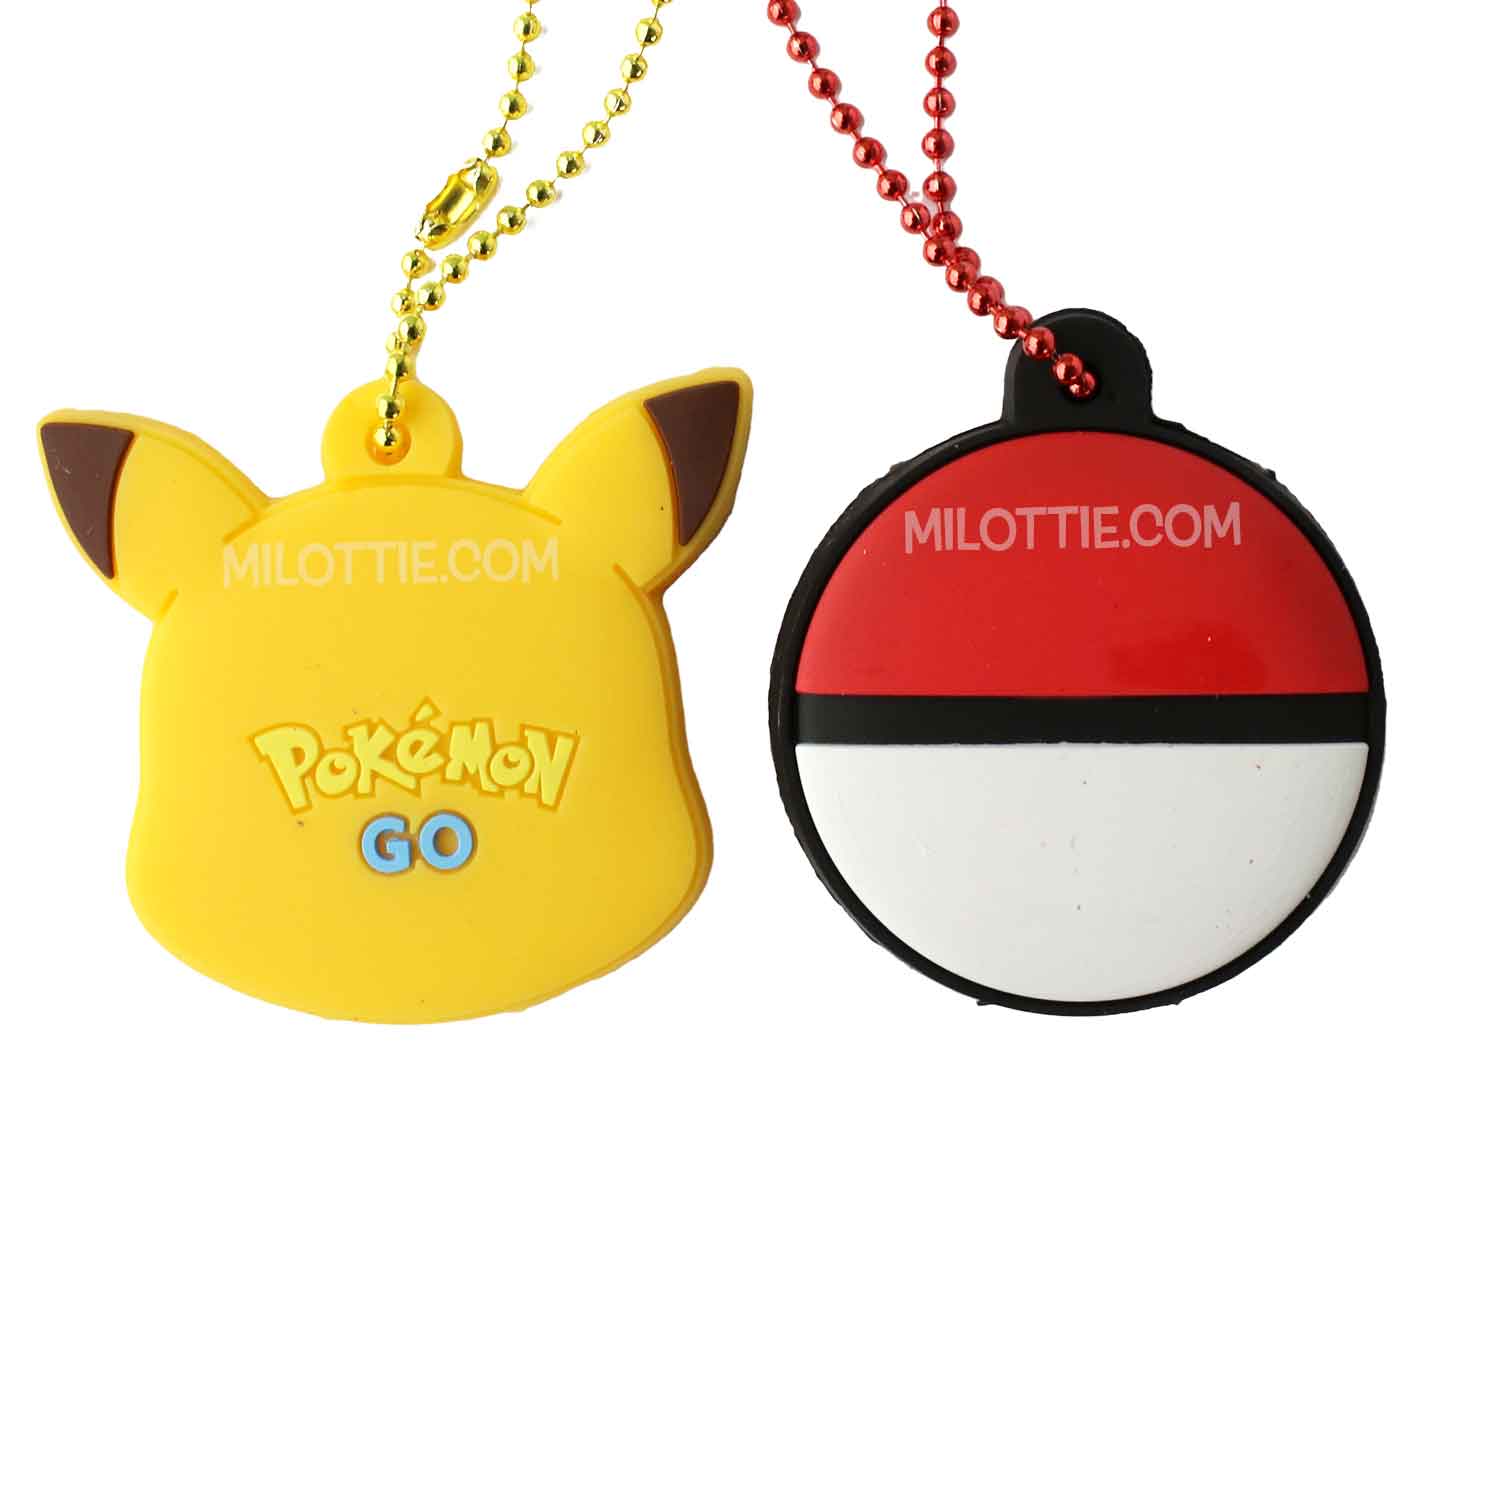 Pikachu Pokeball key covers - Milottie